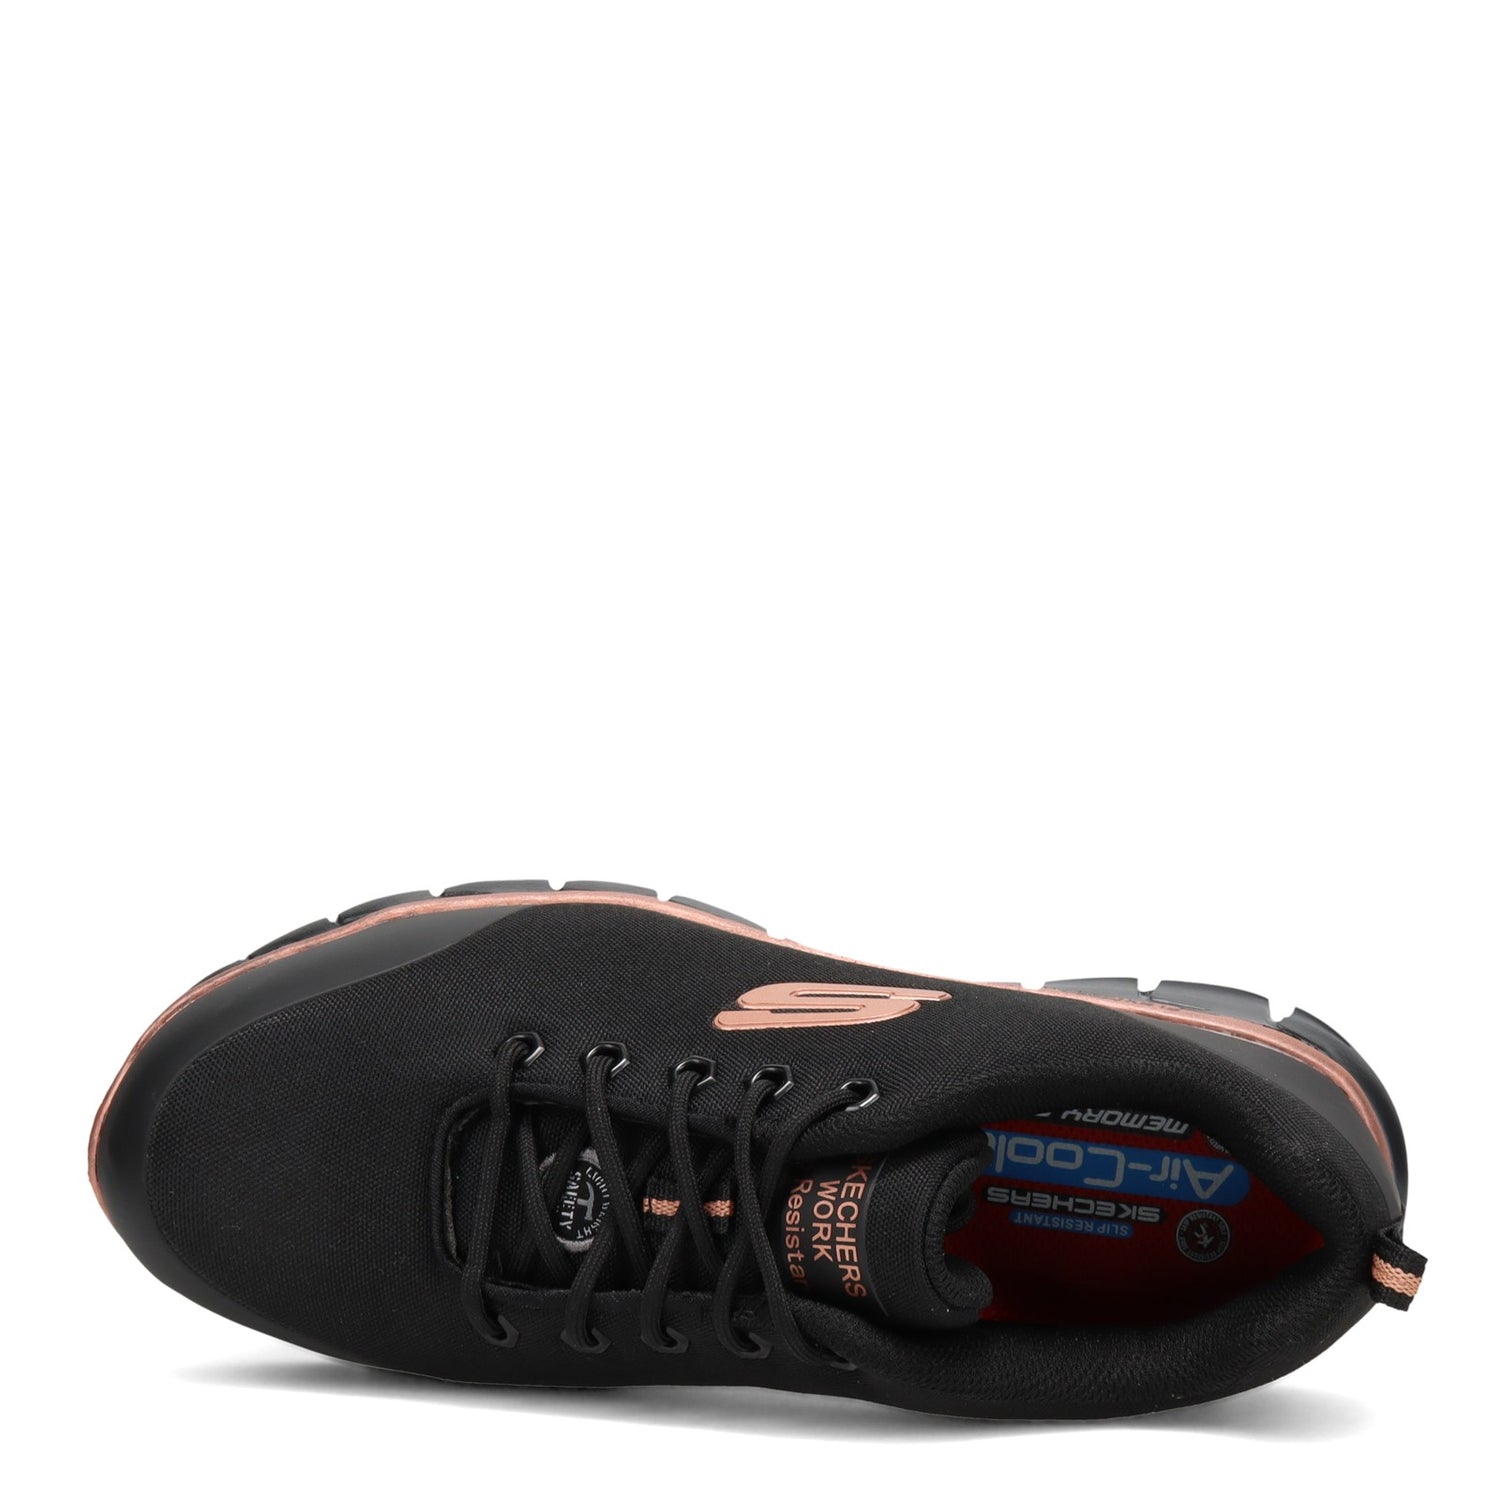 Peltz Shoes  Women's Skechers Work Sure Track - Chiton Alloy Toe Work Shoe BLACK 108025-BKRG